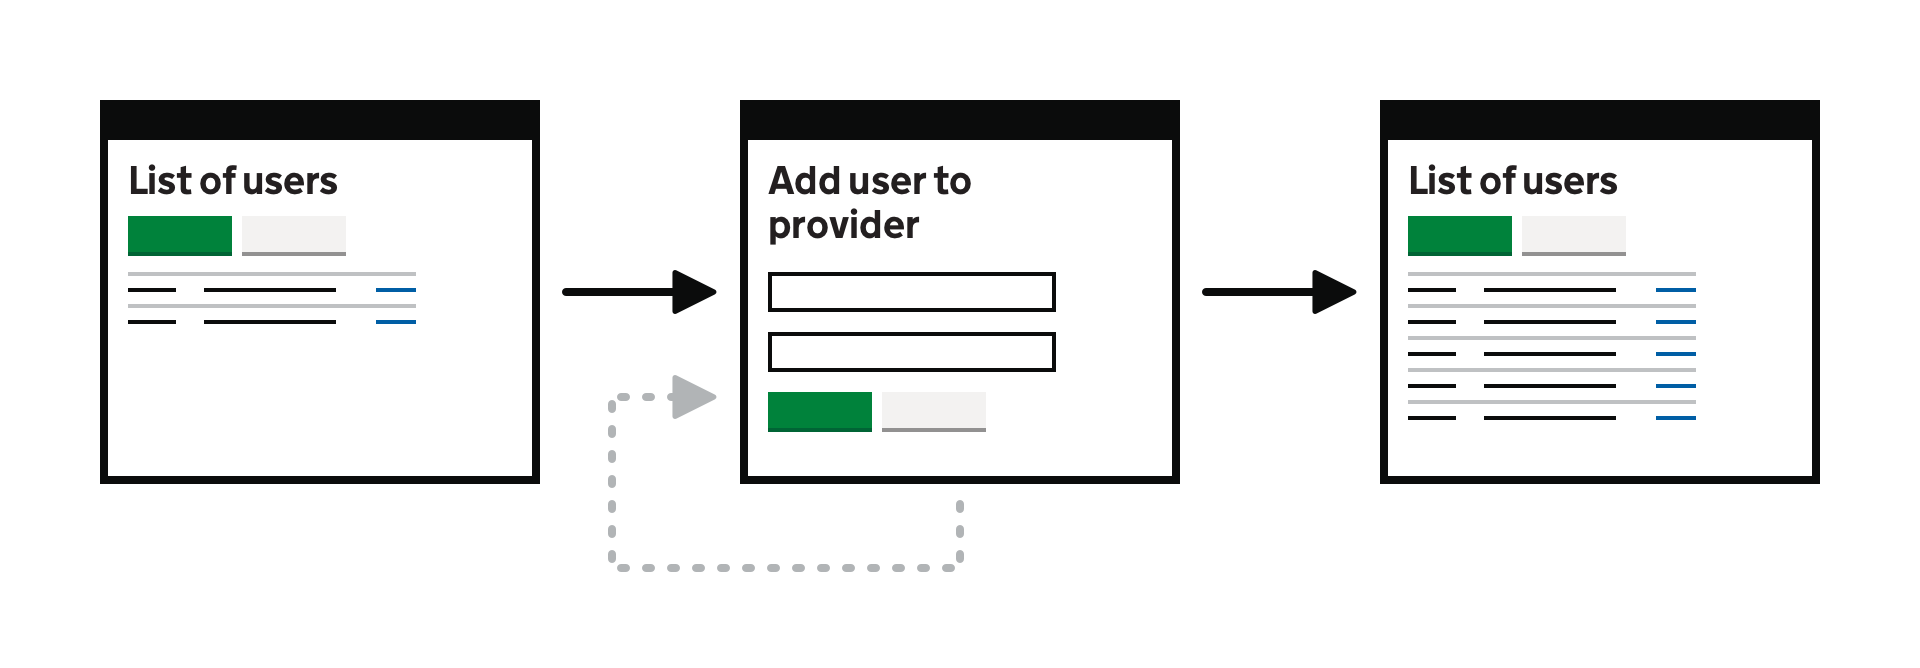 Adding a single user to a provider